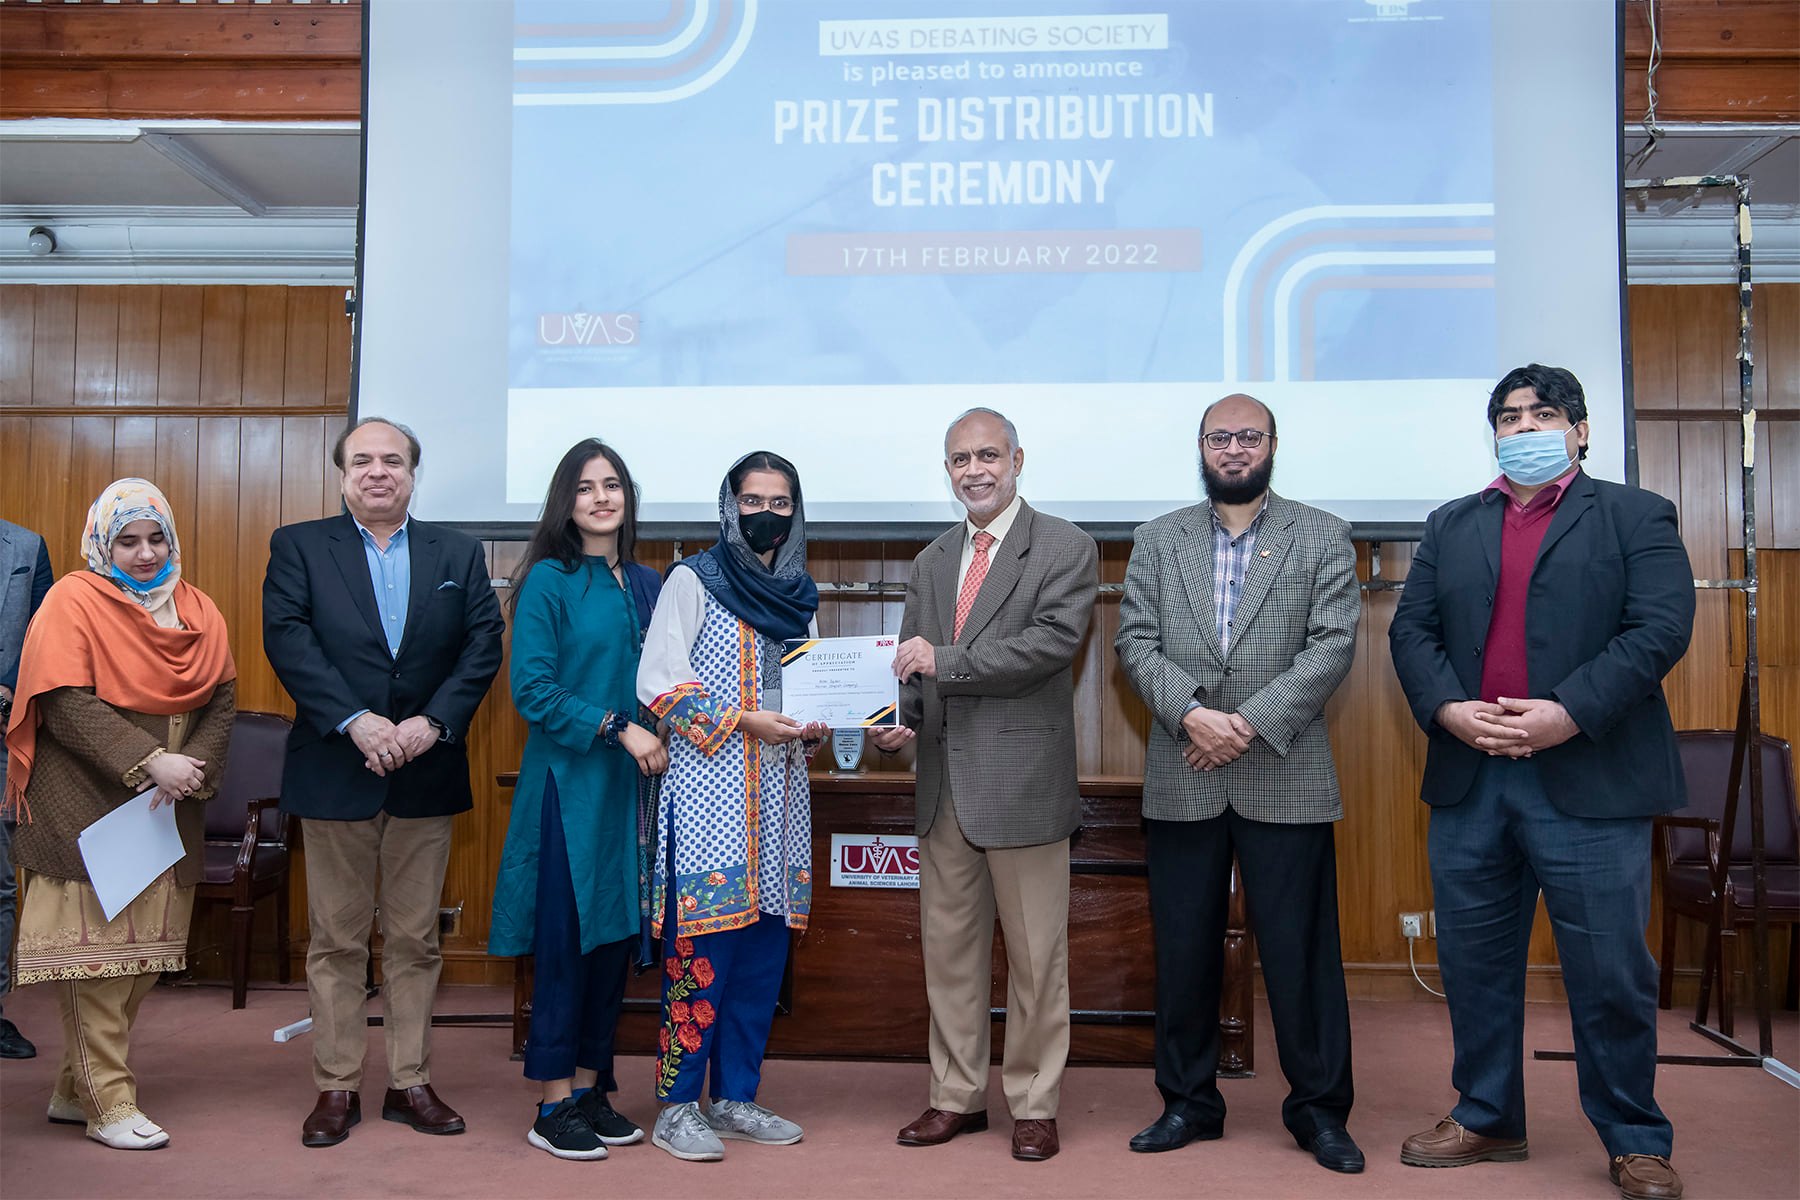 UVAS VC Distributed prize among Debating Society (1)